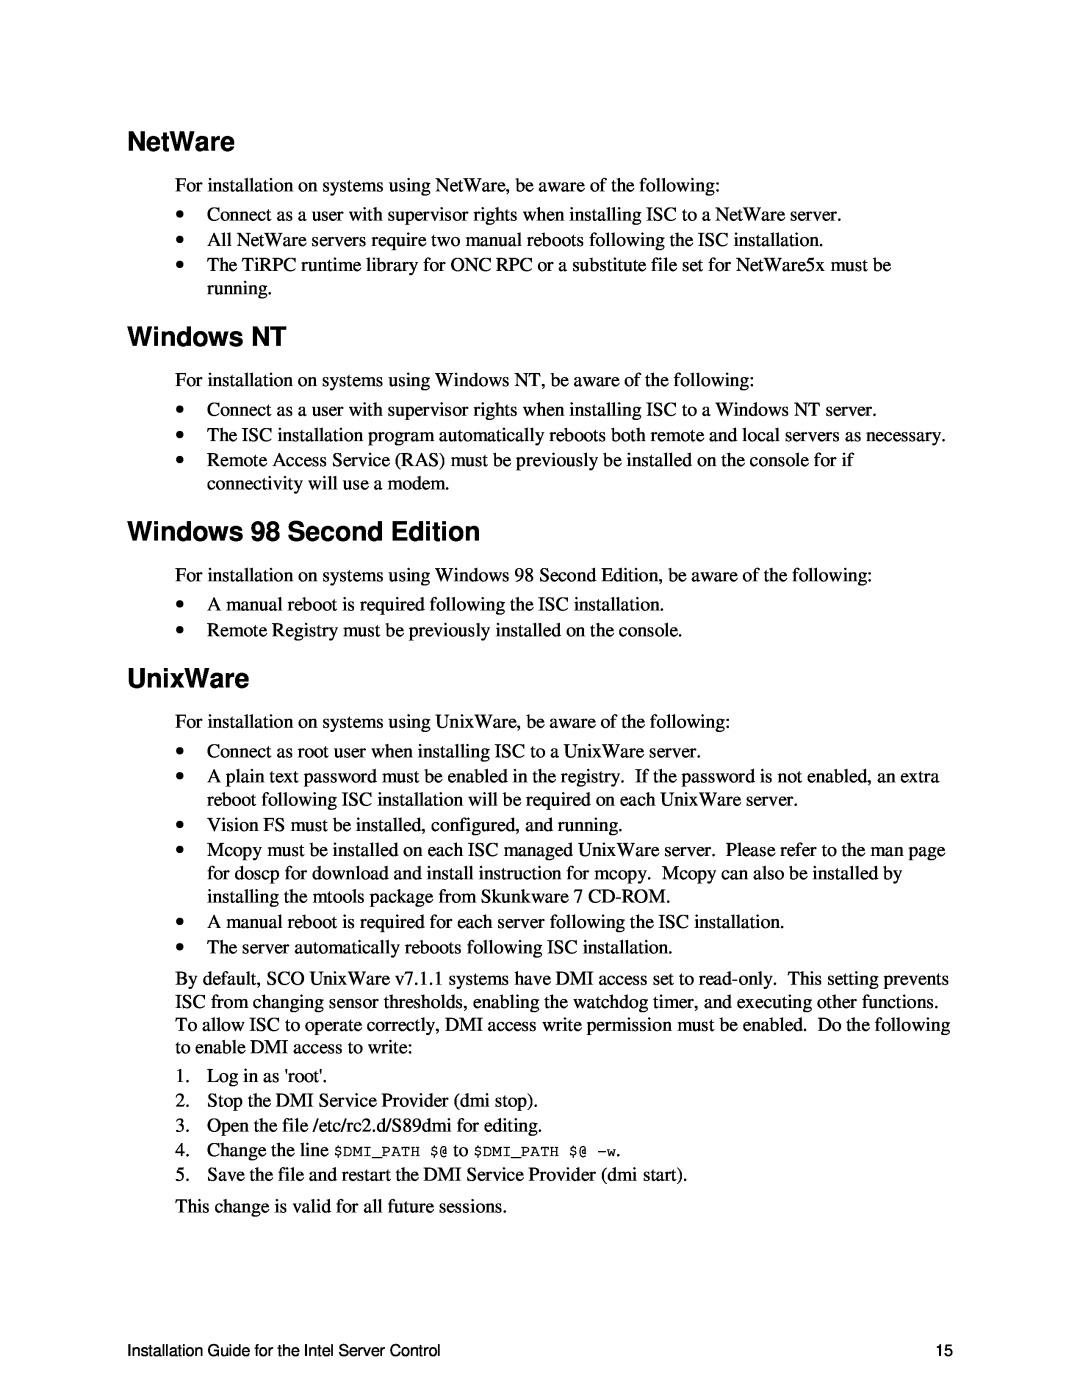 Intel 747116-011 manual NetWare, Windows NT, Windows 98 Second Edition, UnixWare 